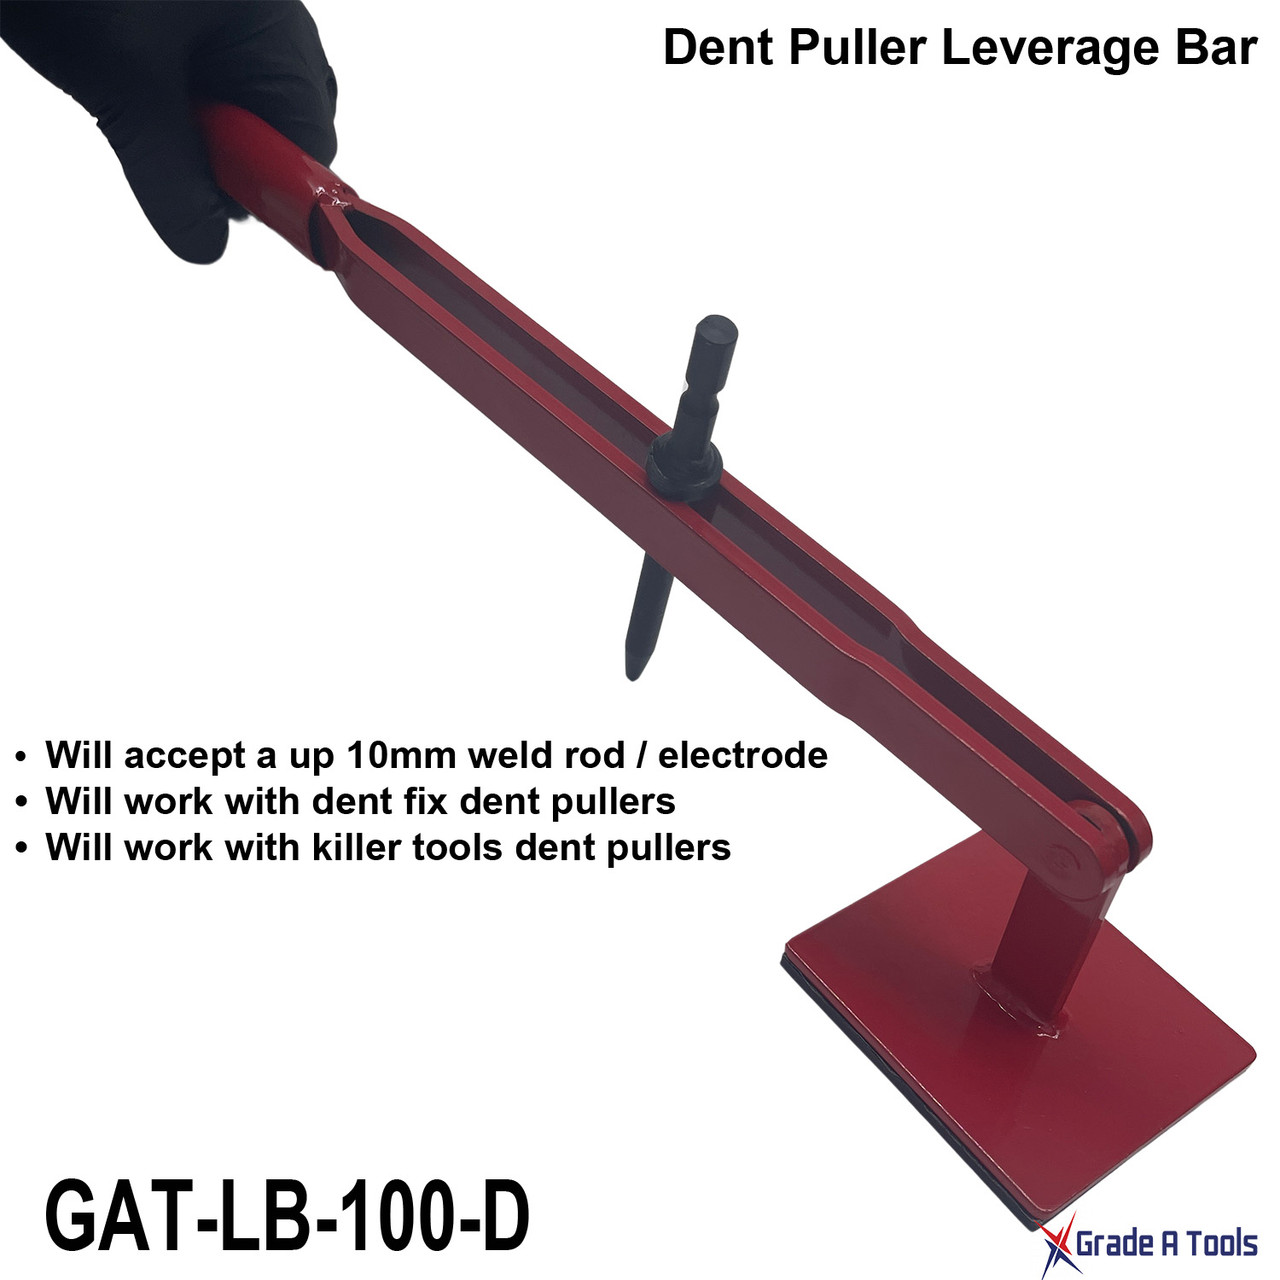 Dent Puller leverage bar - Deluxe E